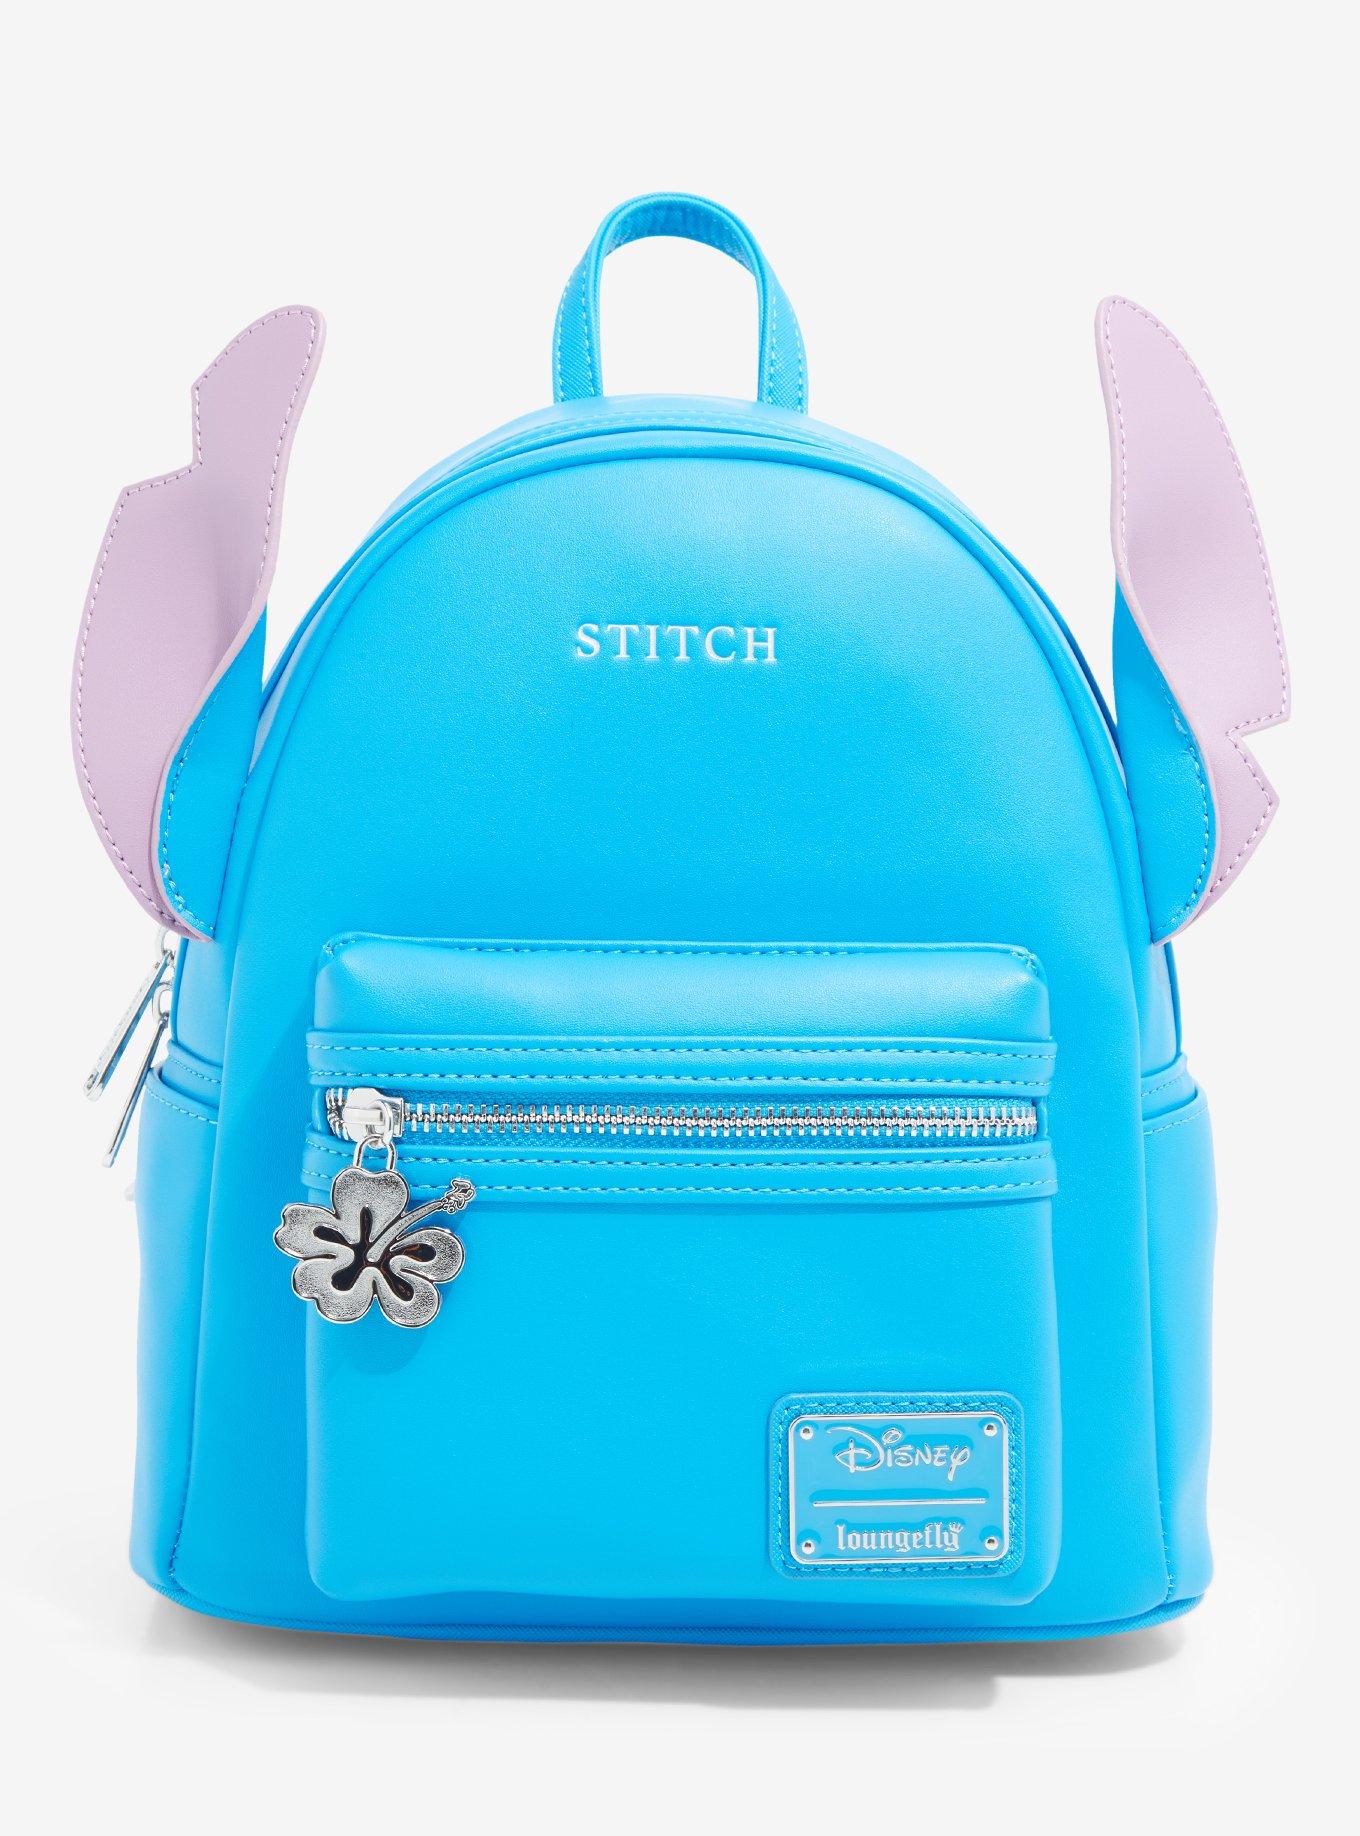 Stitch Bag